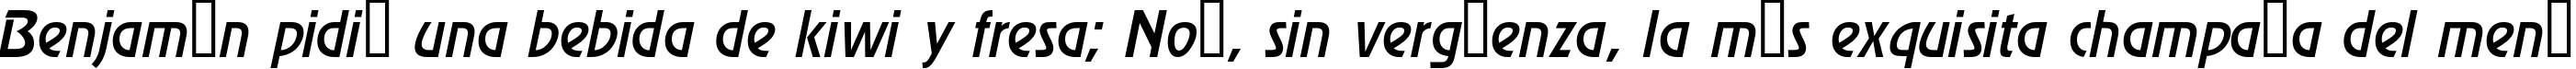 Пример написания шрифтом a_RewinderMedium Italic текста на испанском